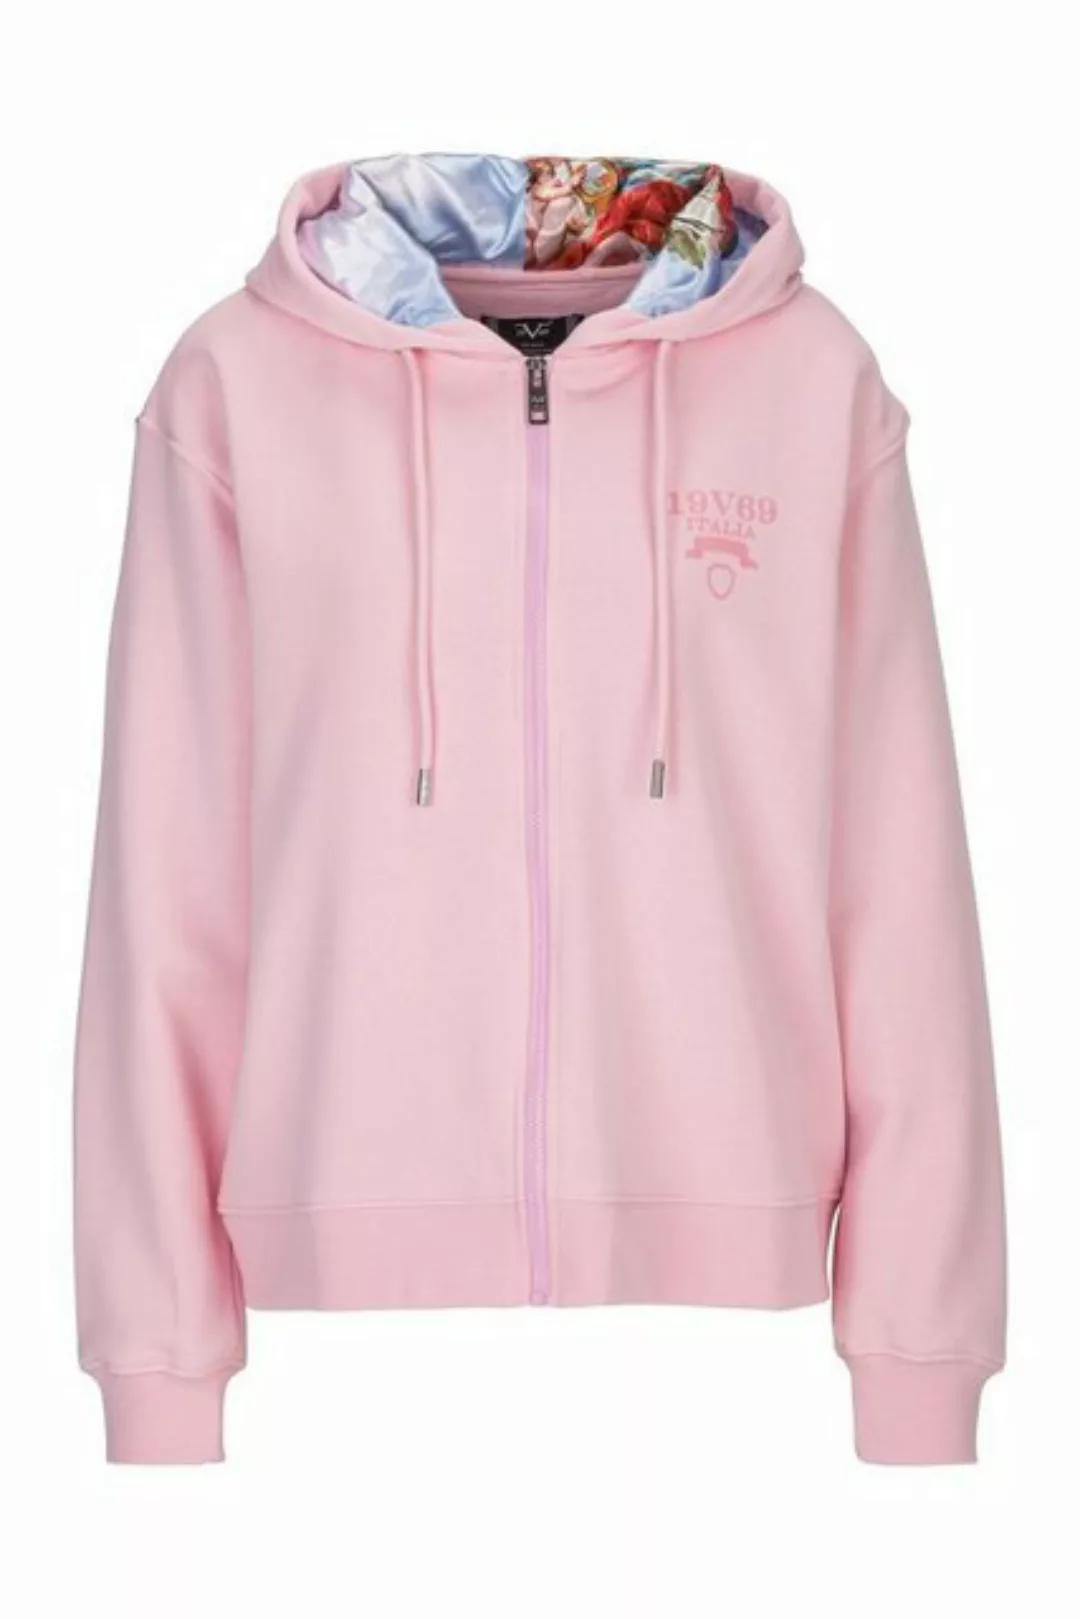 19V69 Italia by Versace Kapuzensweatshirt HOLLY Damen Sweatshirtjacke mit E günstig online kaufen